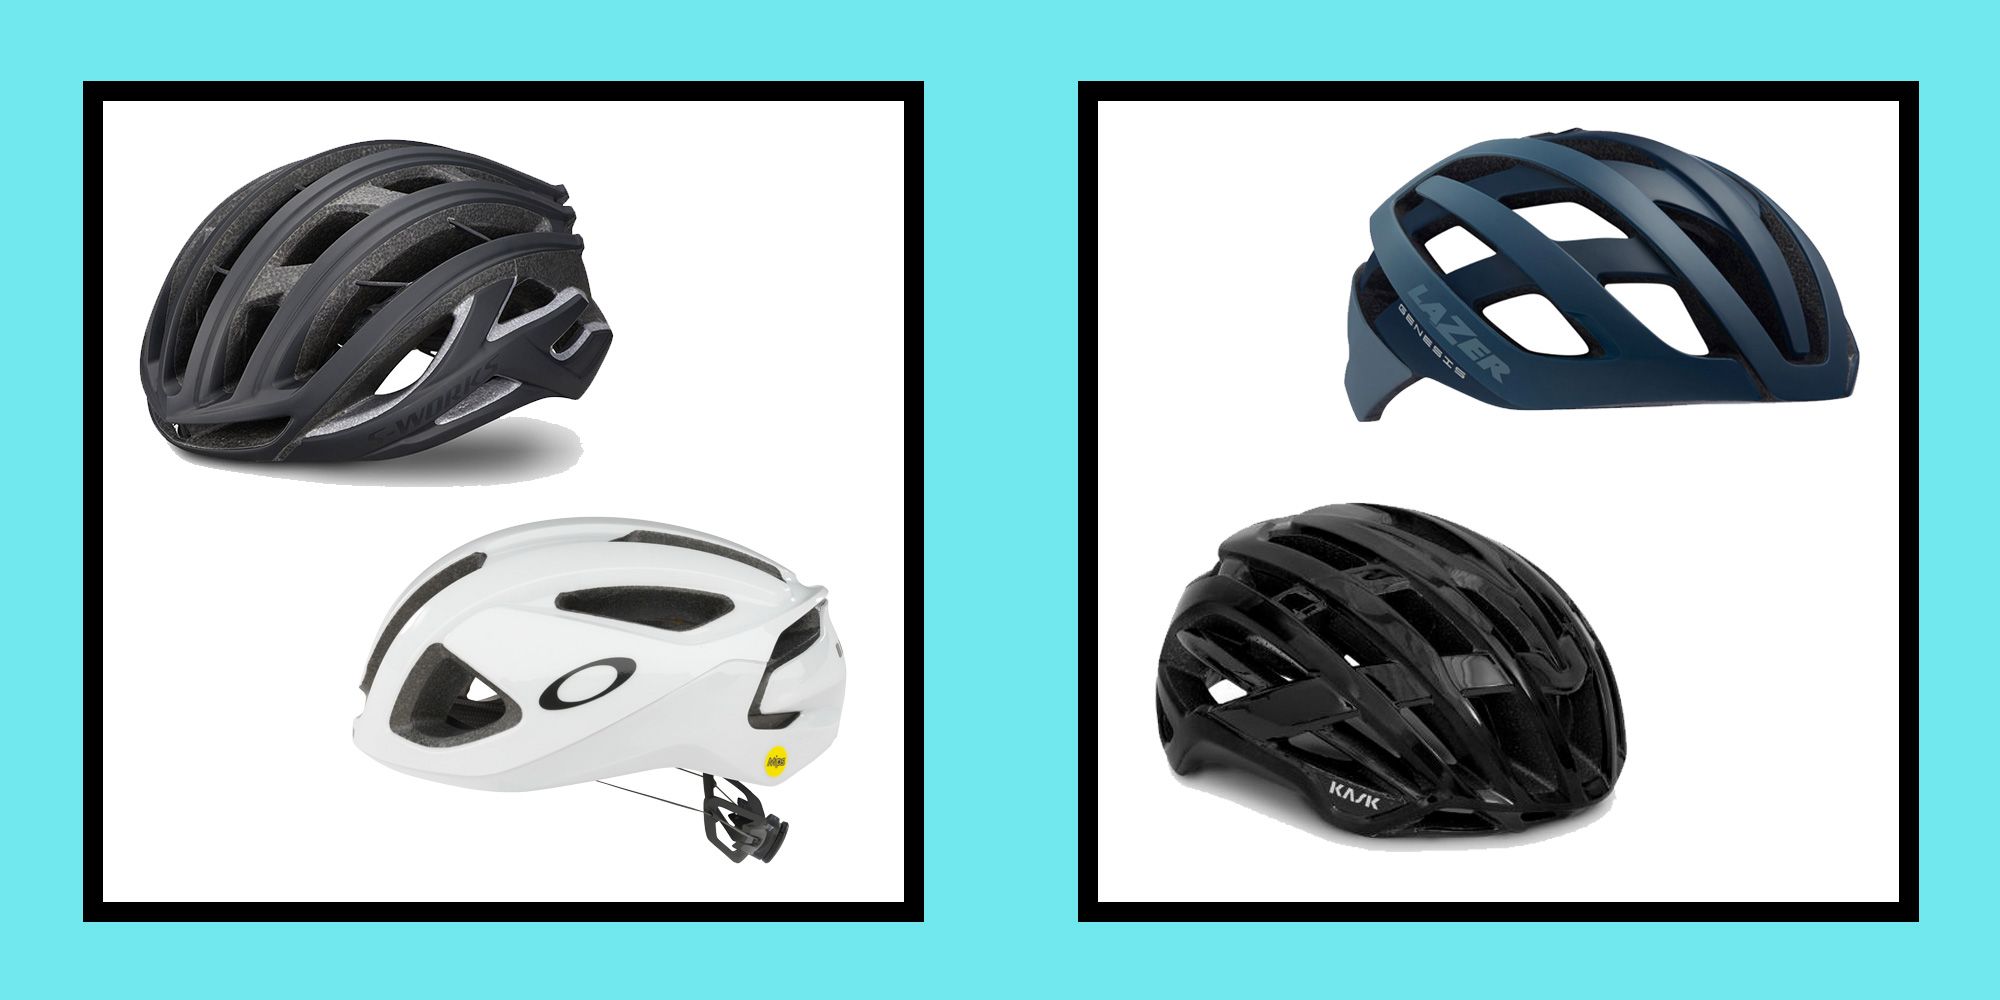 Diskret hat antydning The best bike helmets: Kask, Specialized, Lazer & Oakley tested